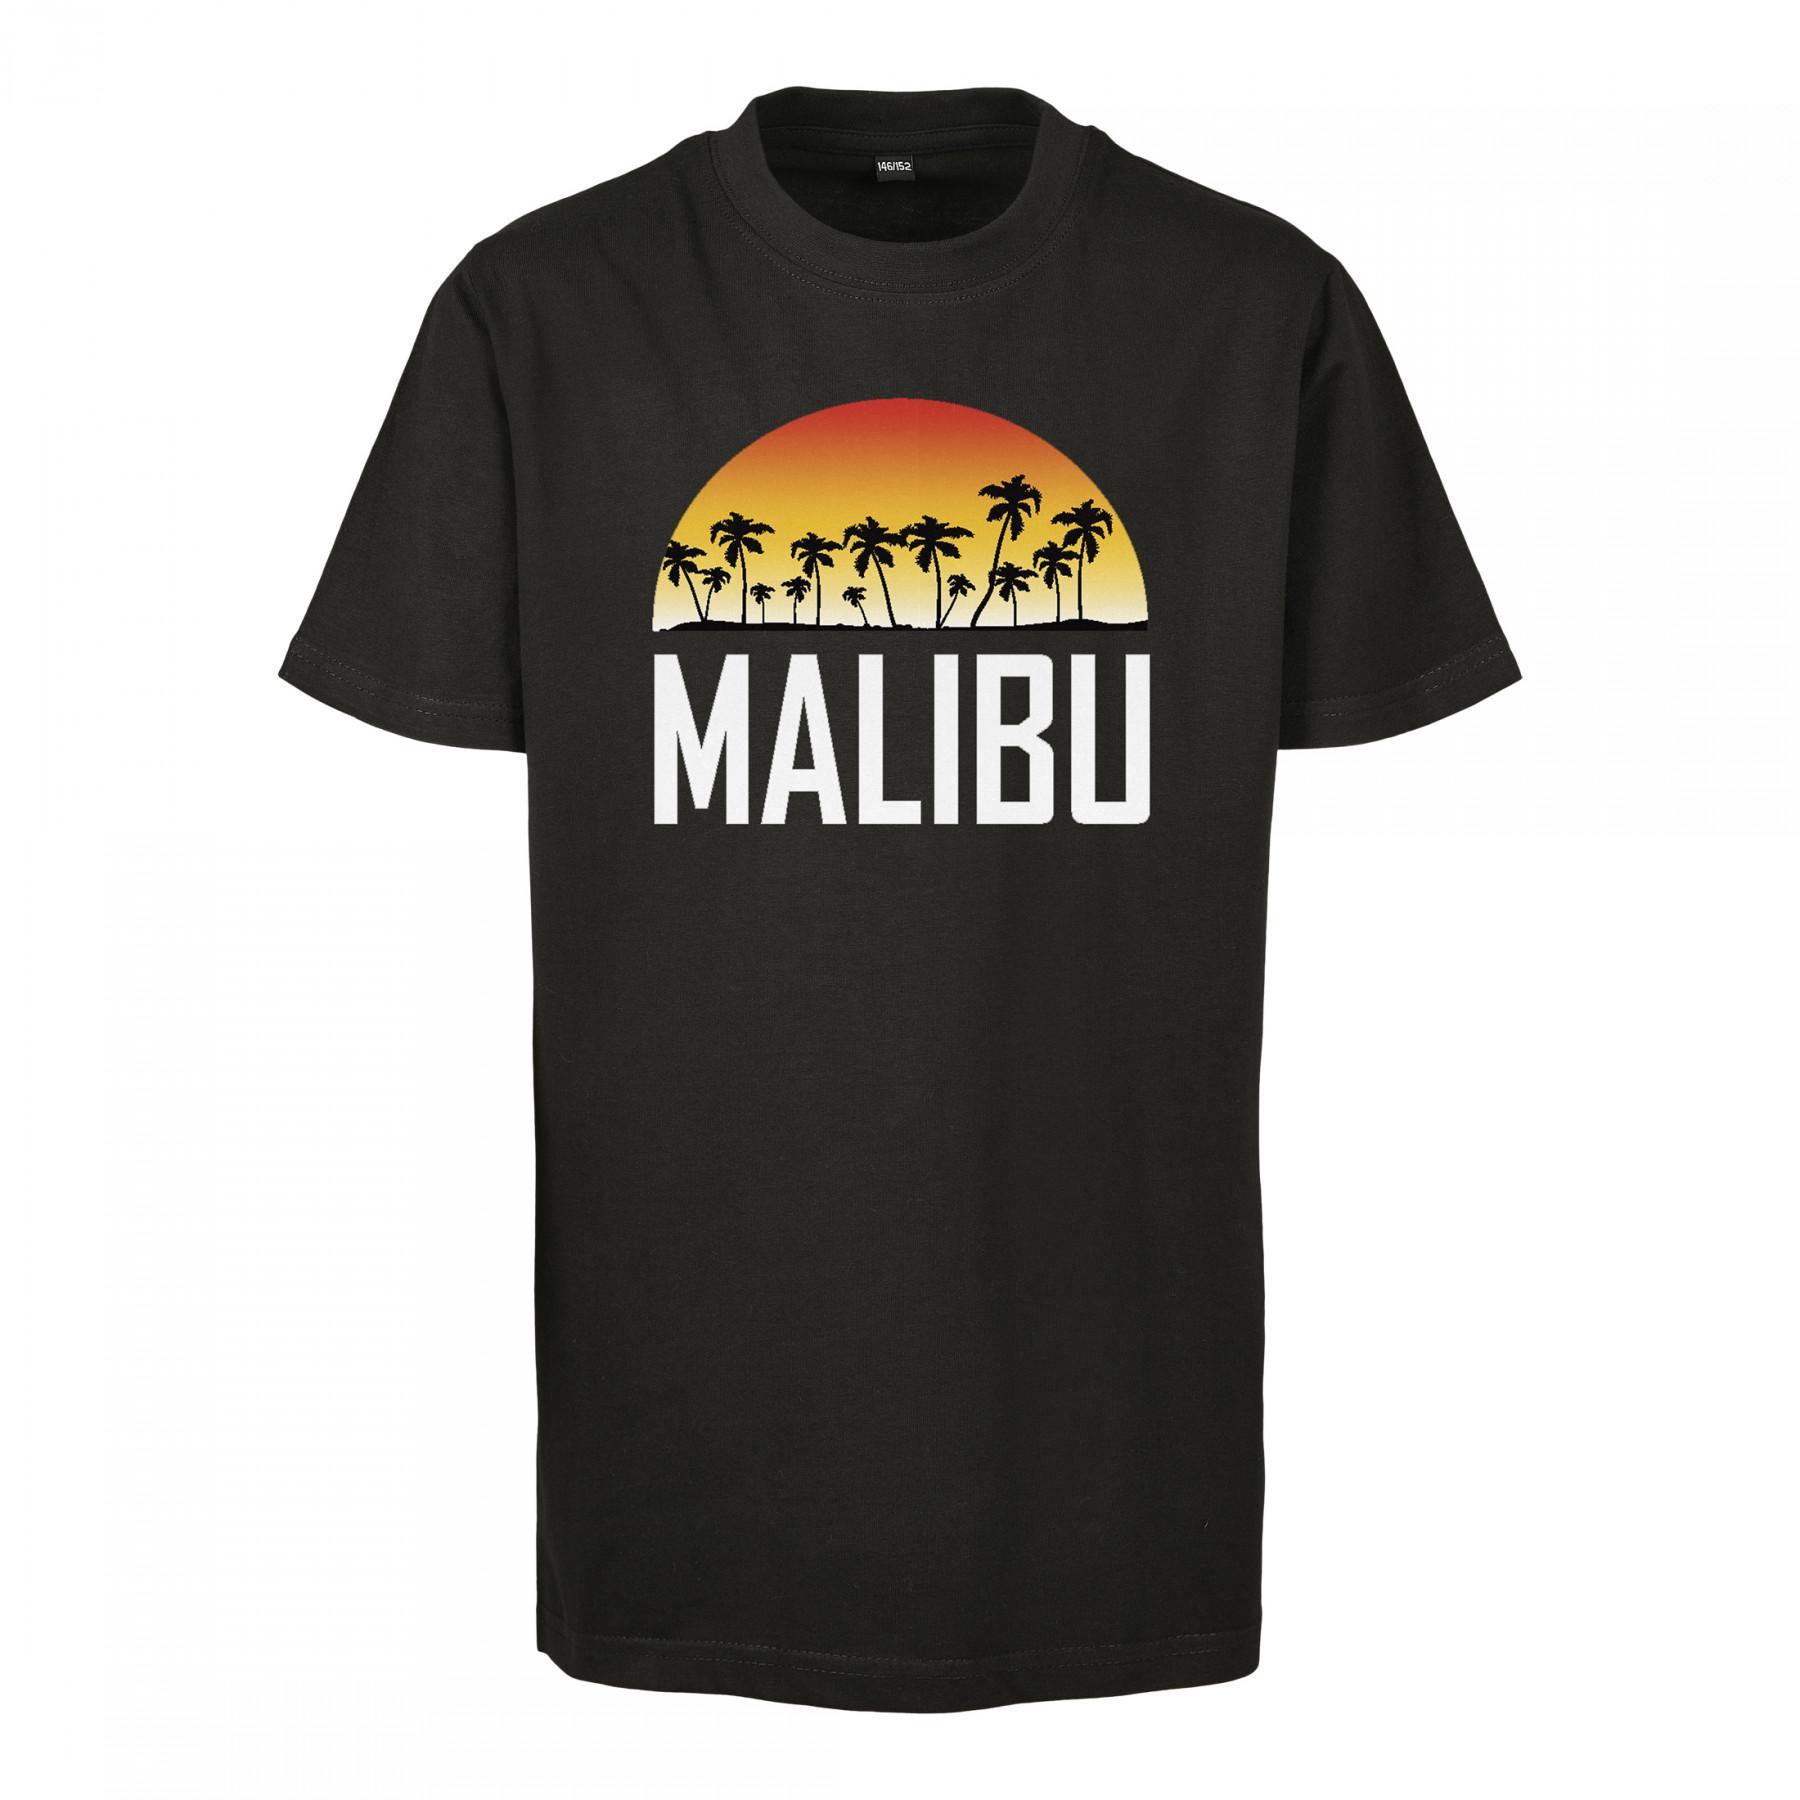 Junior Miter Malibu T-shirt